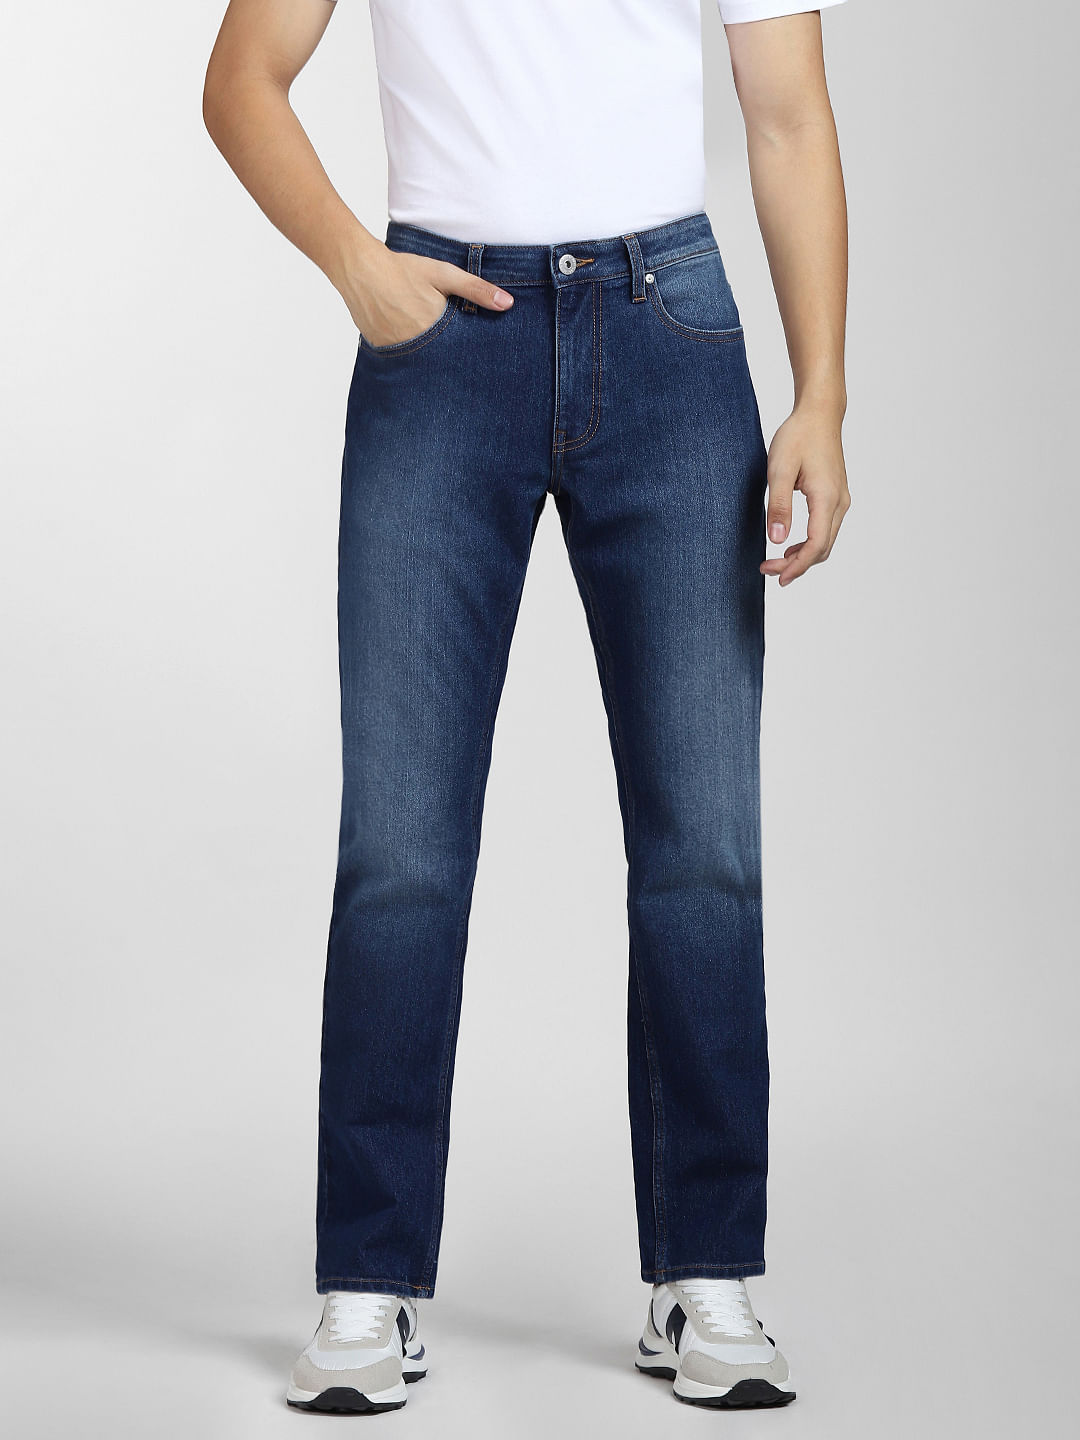 Hill Jeans Drift Light Blue | Dr Denim Jeans Australia – Dr Denim Jeans -  Australia & NZ